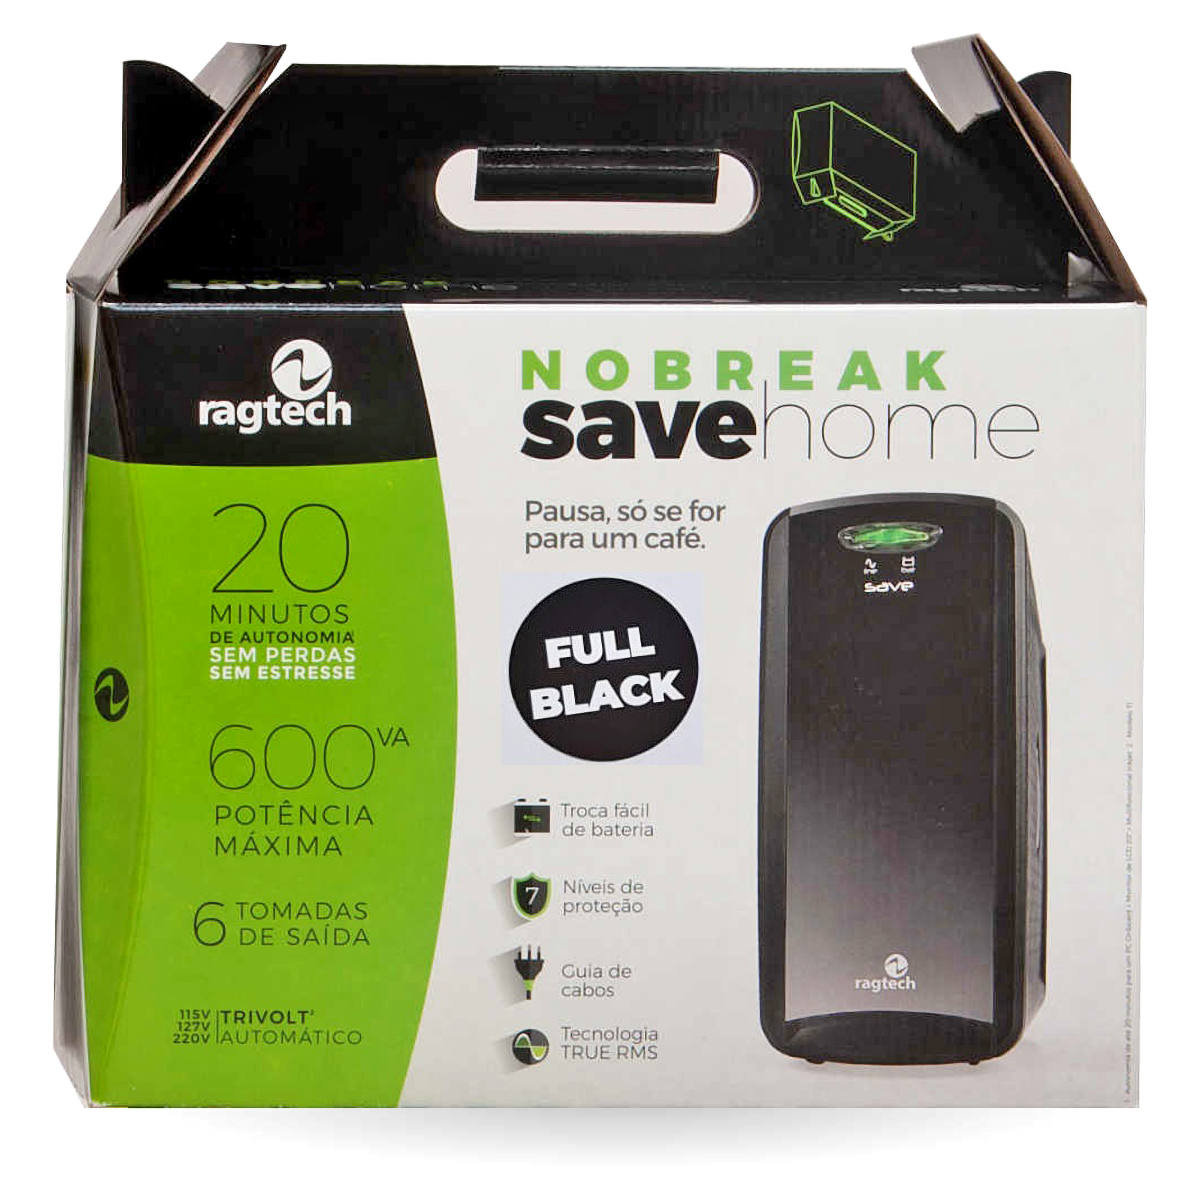 Nobreak Ragtech Full Black 600VA 6 Tomadas Troca Fácil de Bateria Save Home STD TI 4114 - Exclusividade Mundoware